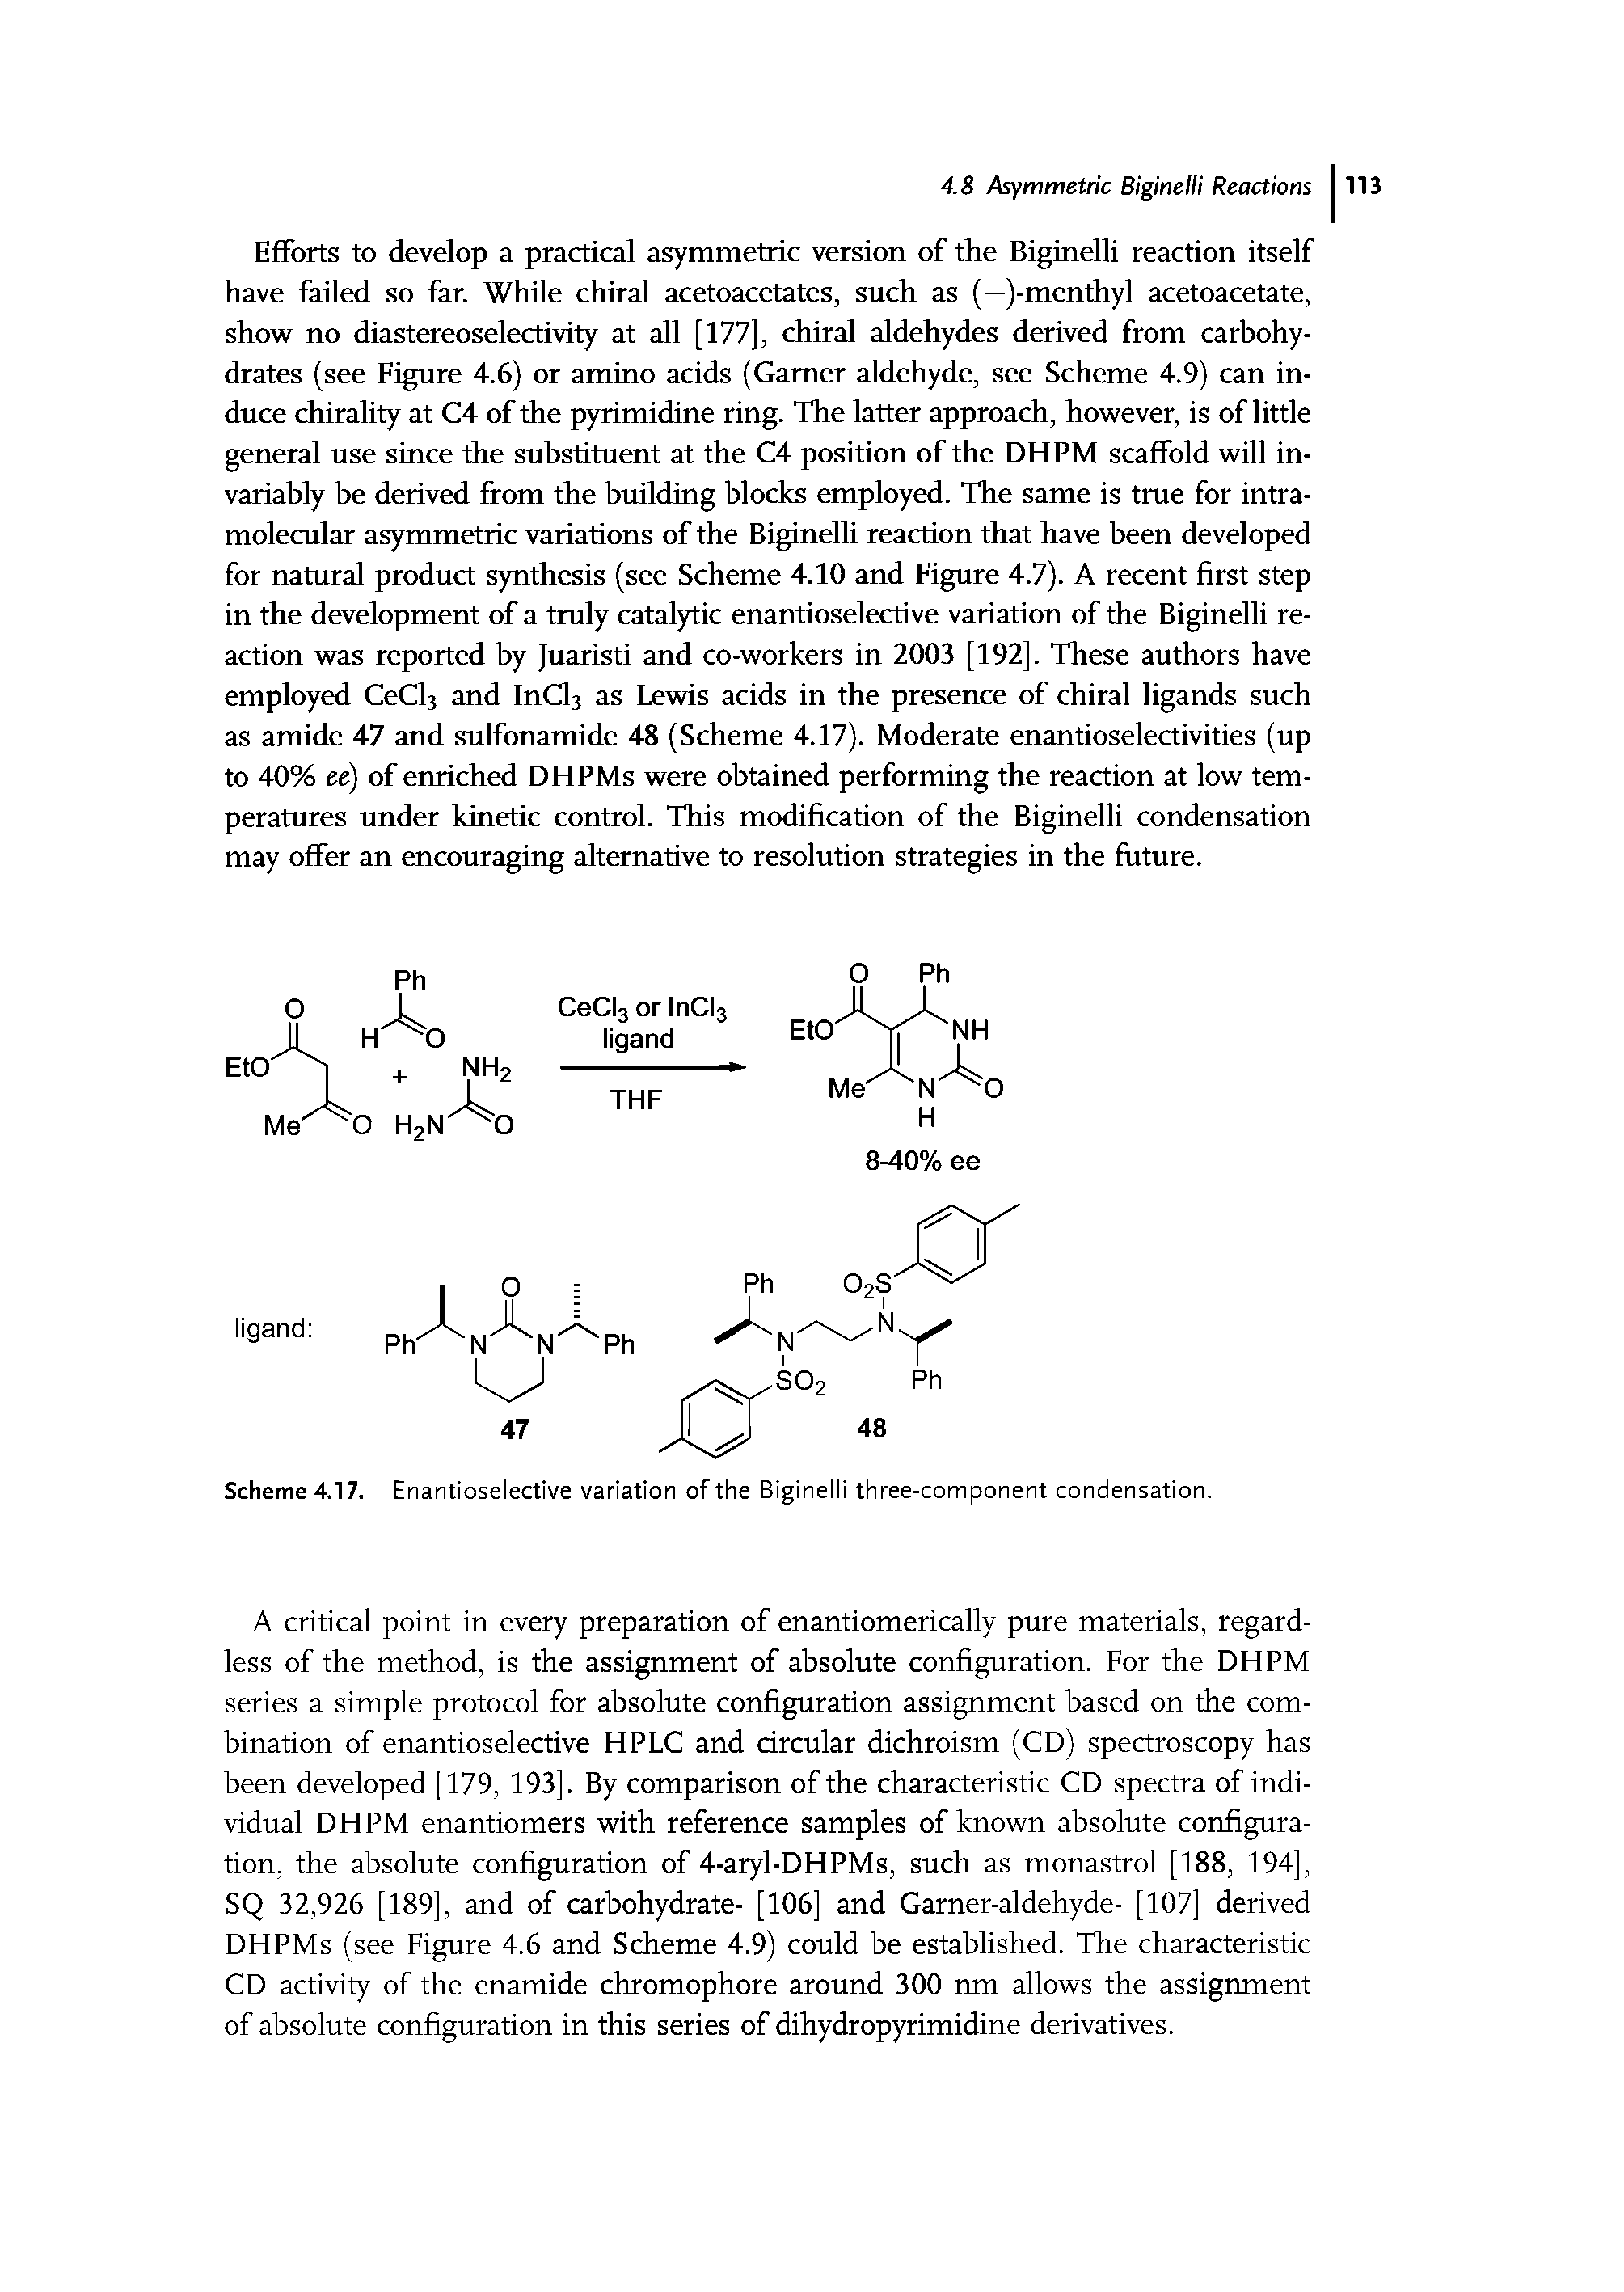 Scheme 4.17. Enantioselective variation of the Biginelli three-component condensation.